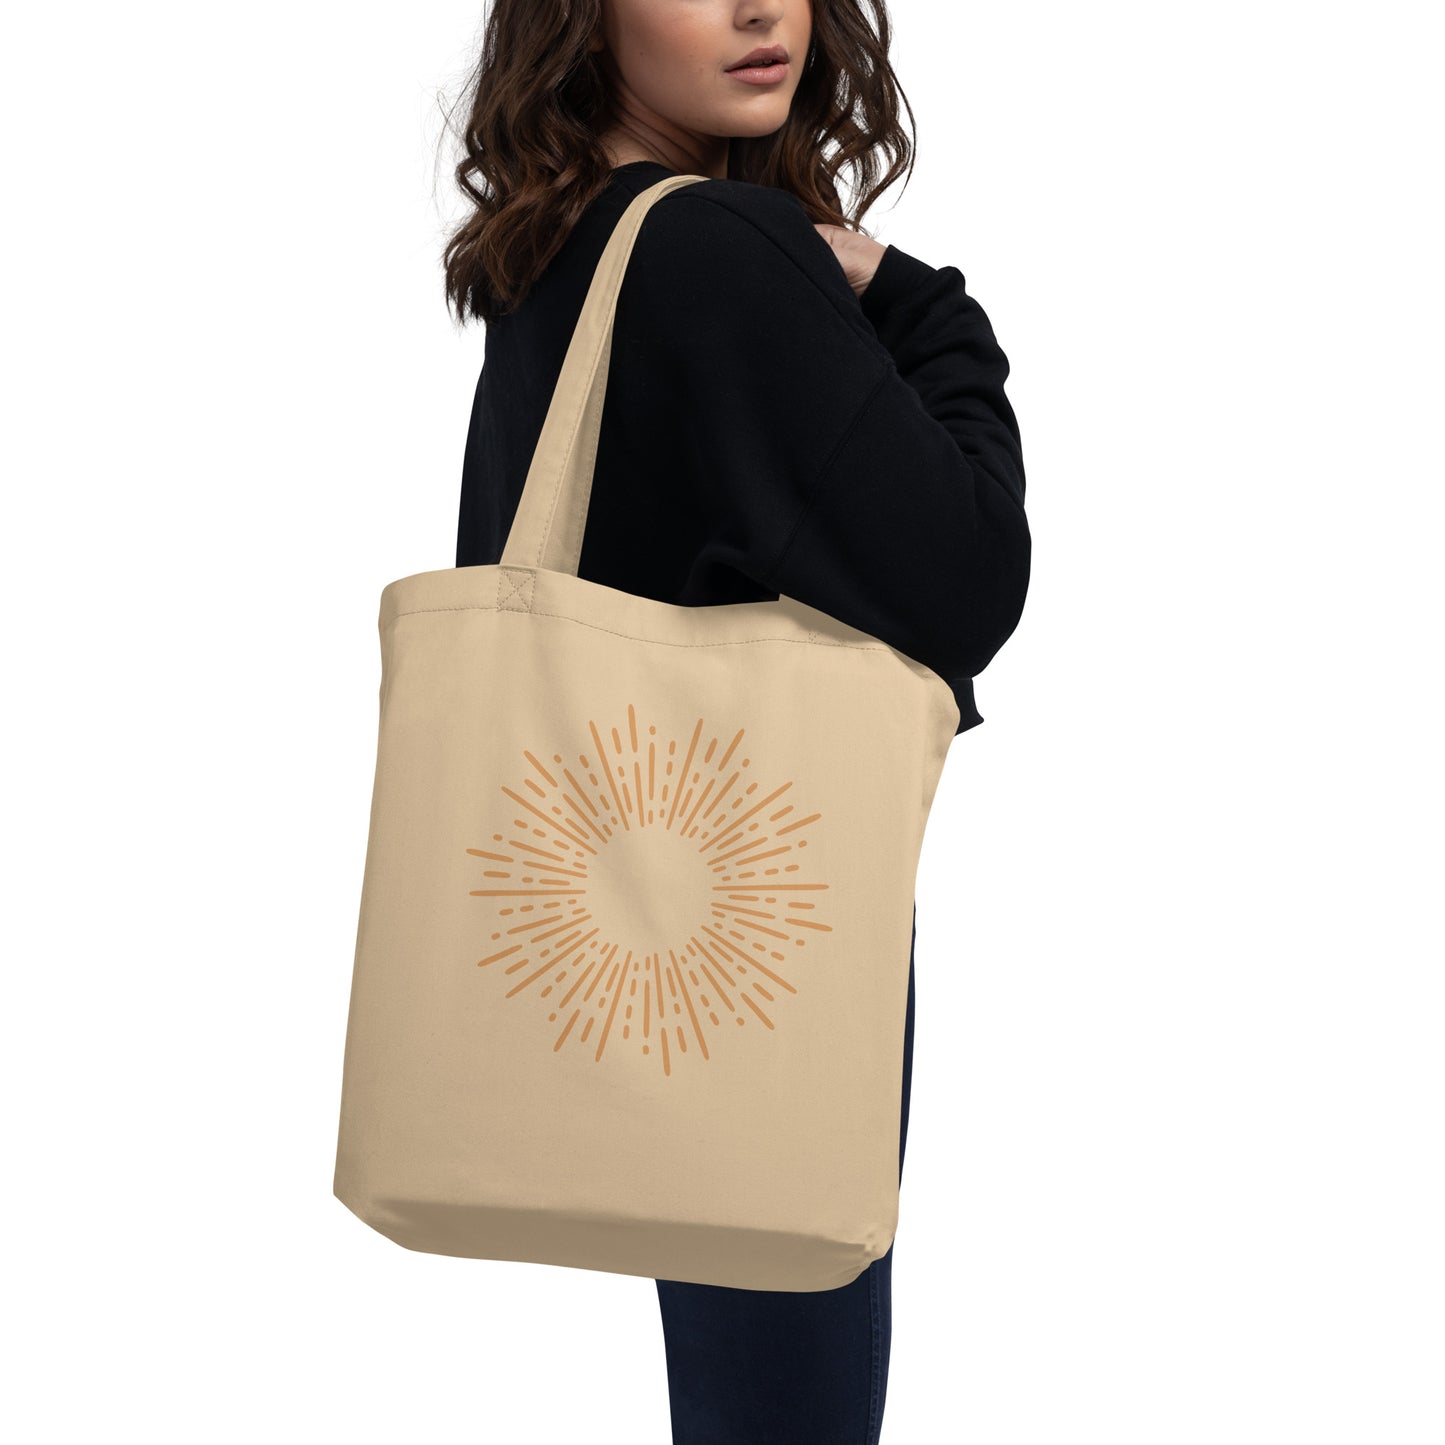 Love & Light Eco Tote Bag w/ Back Design